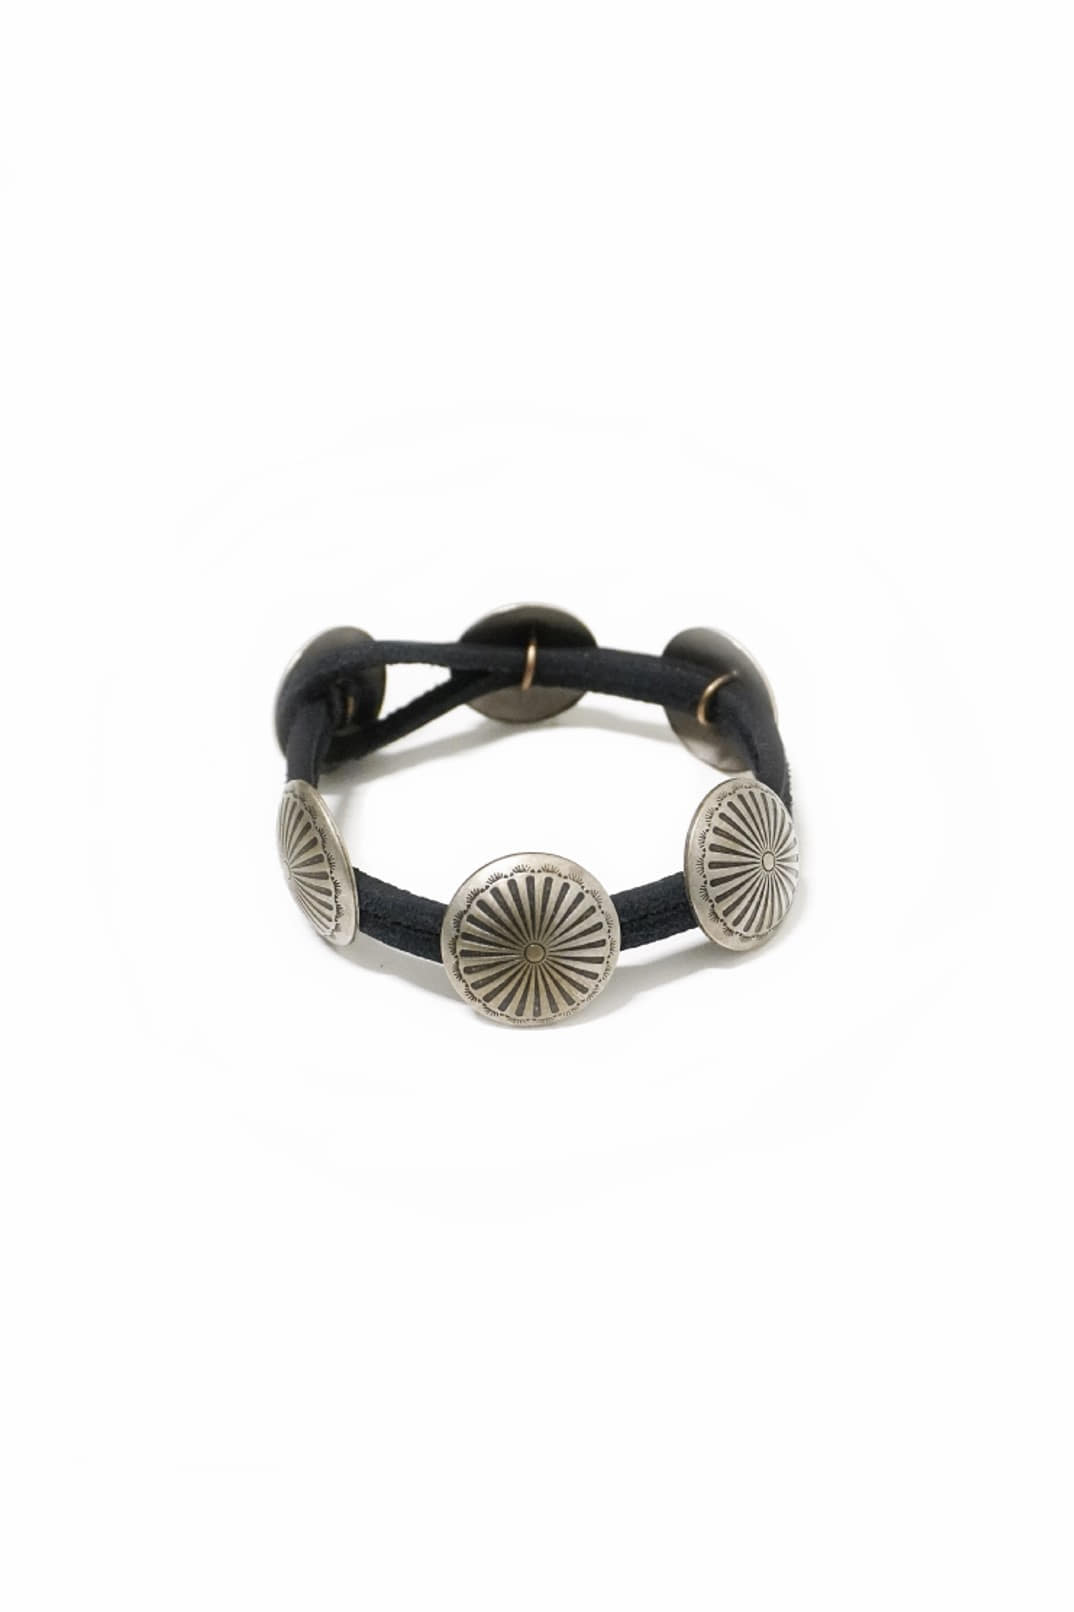 Restock! [YUKETEN] Leather Bracelet with Concho - Black Needlepoint